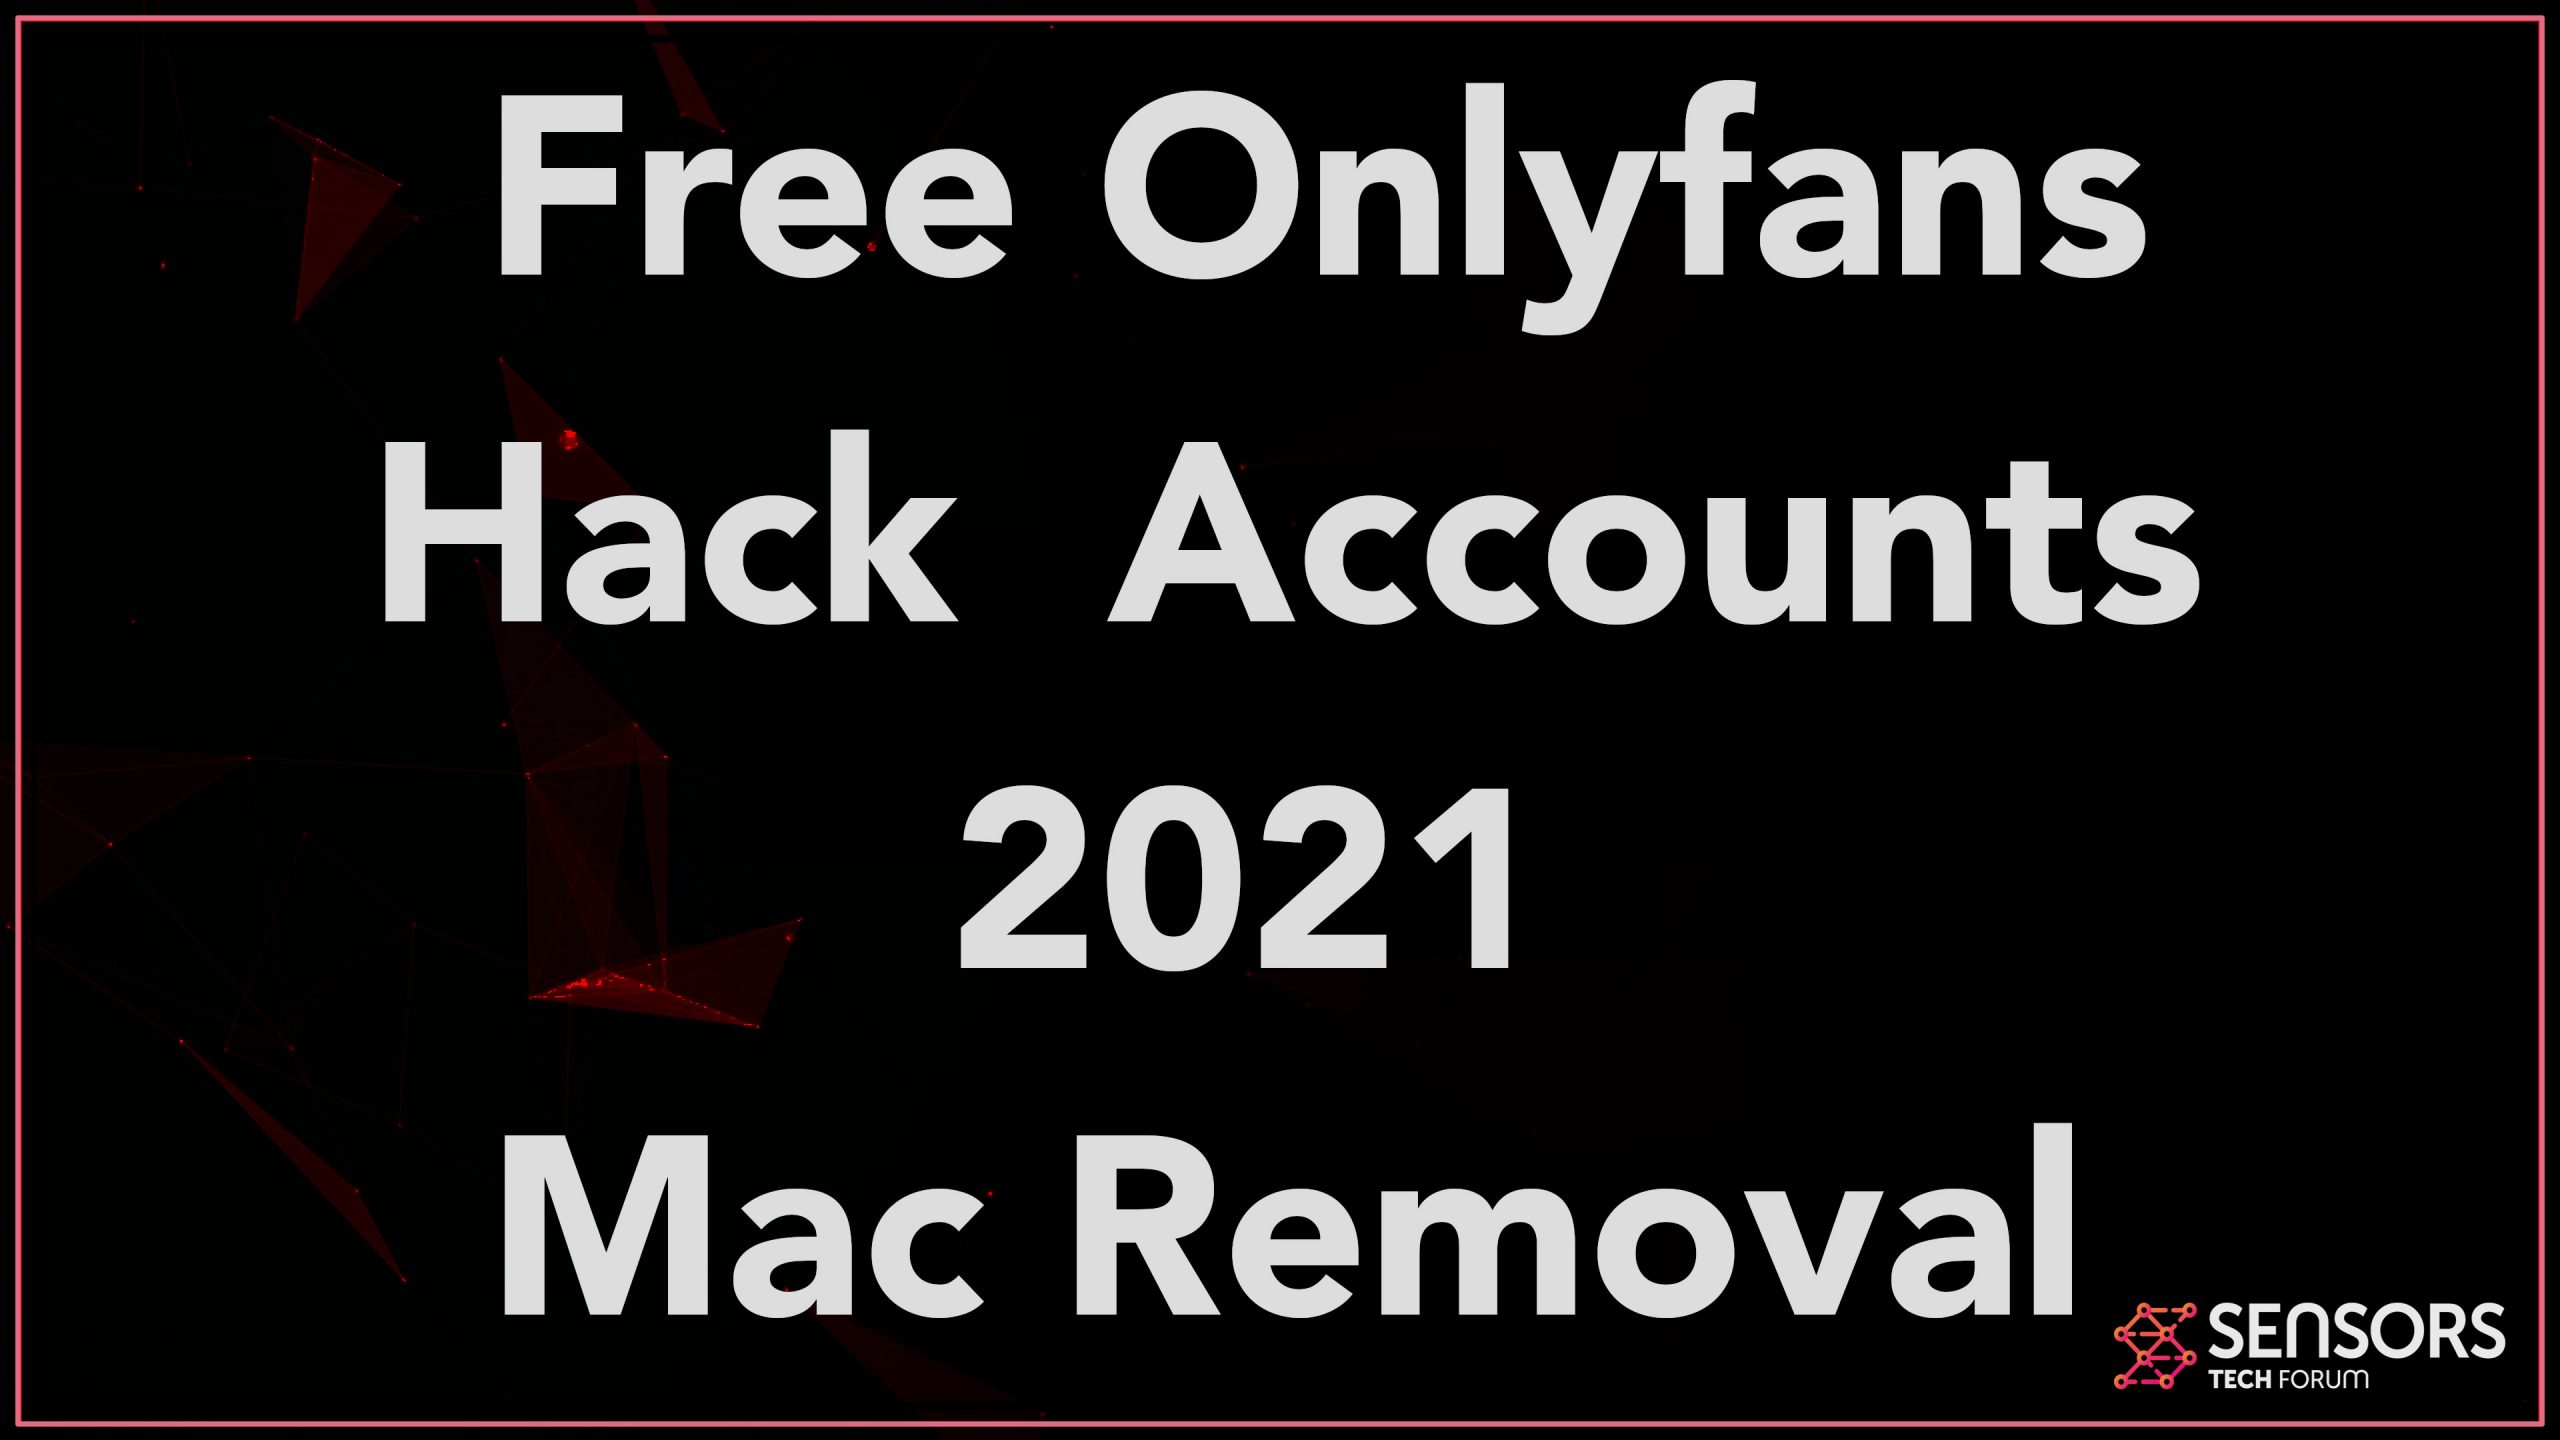 Free onlyfans login 2021